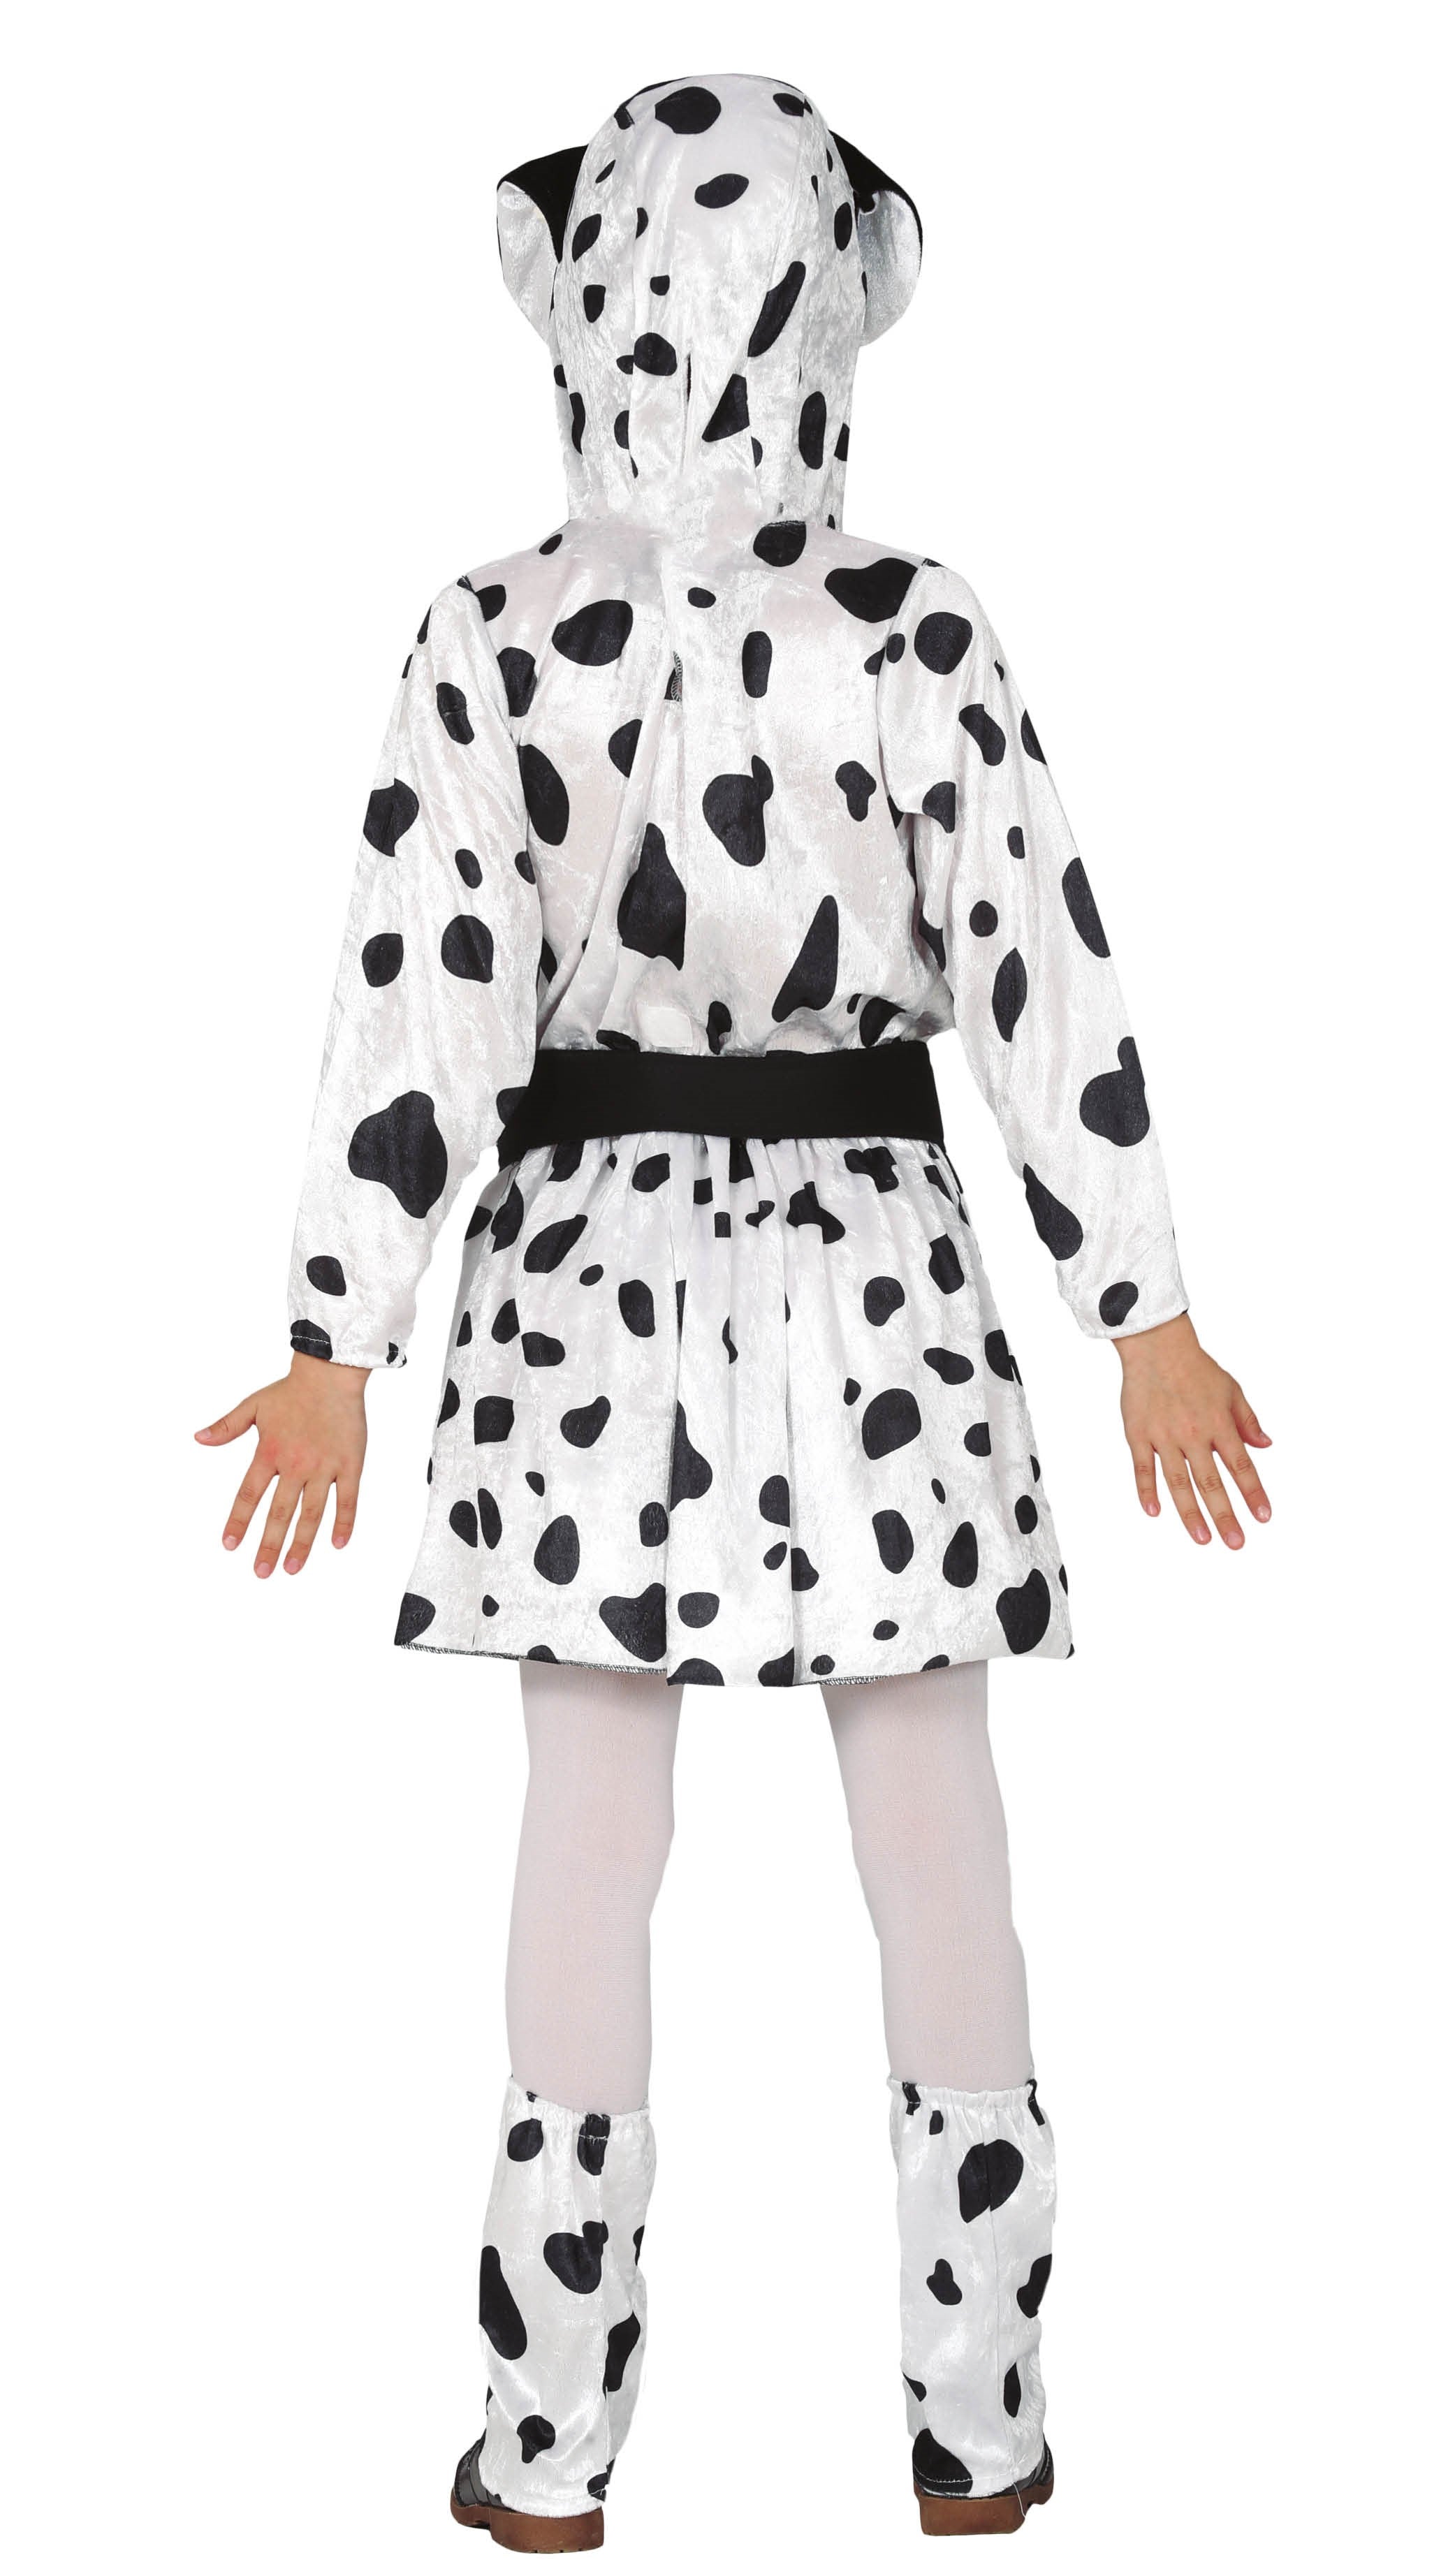 Dalmation Costume Girl